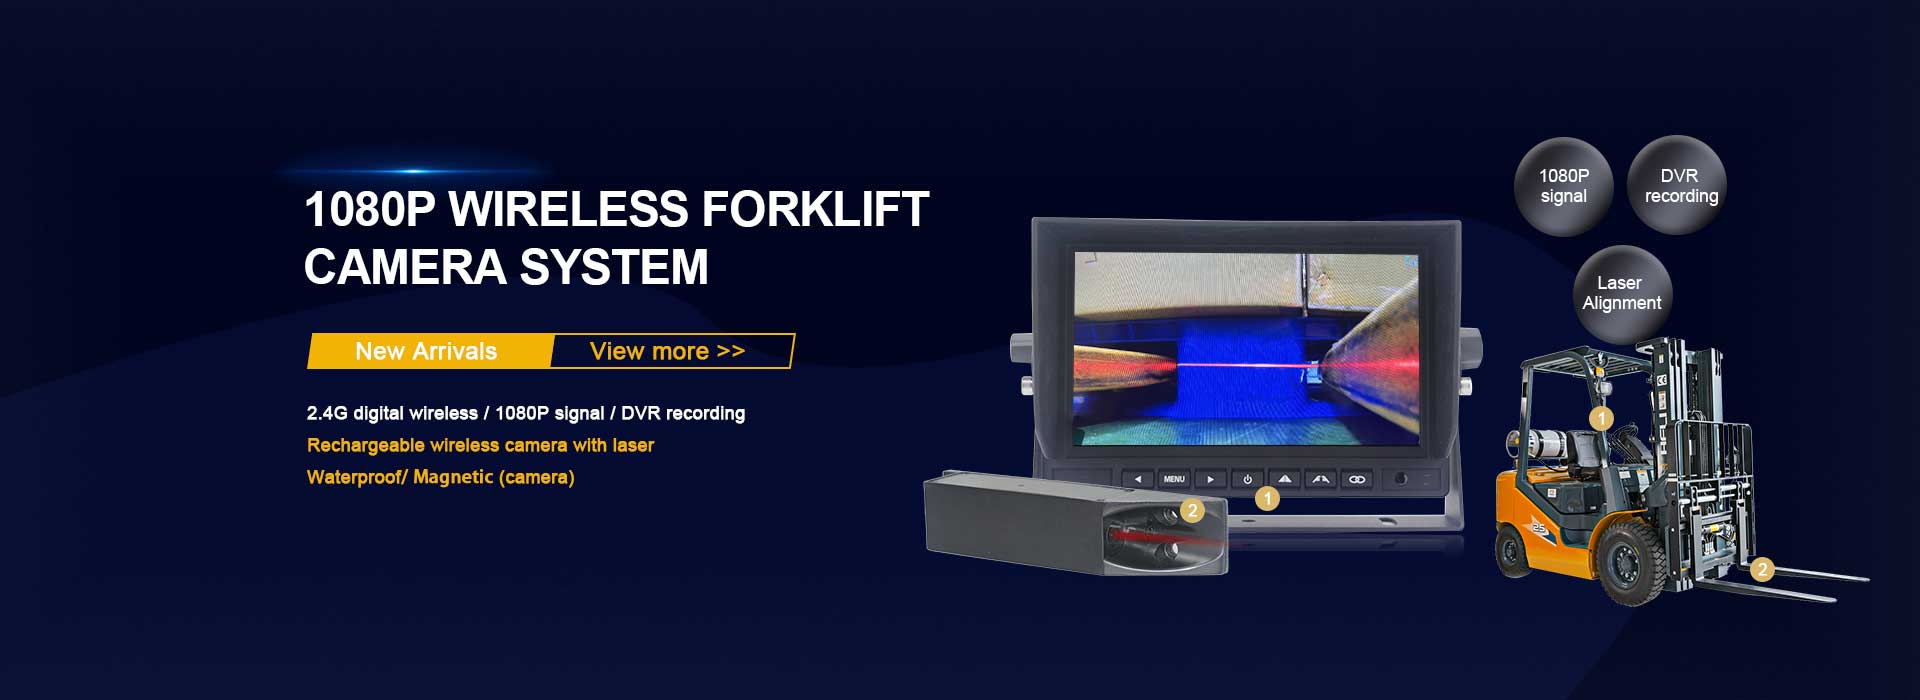 1080P Wireless Forklift  Camera System